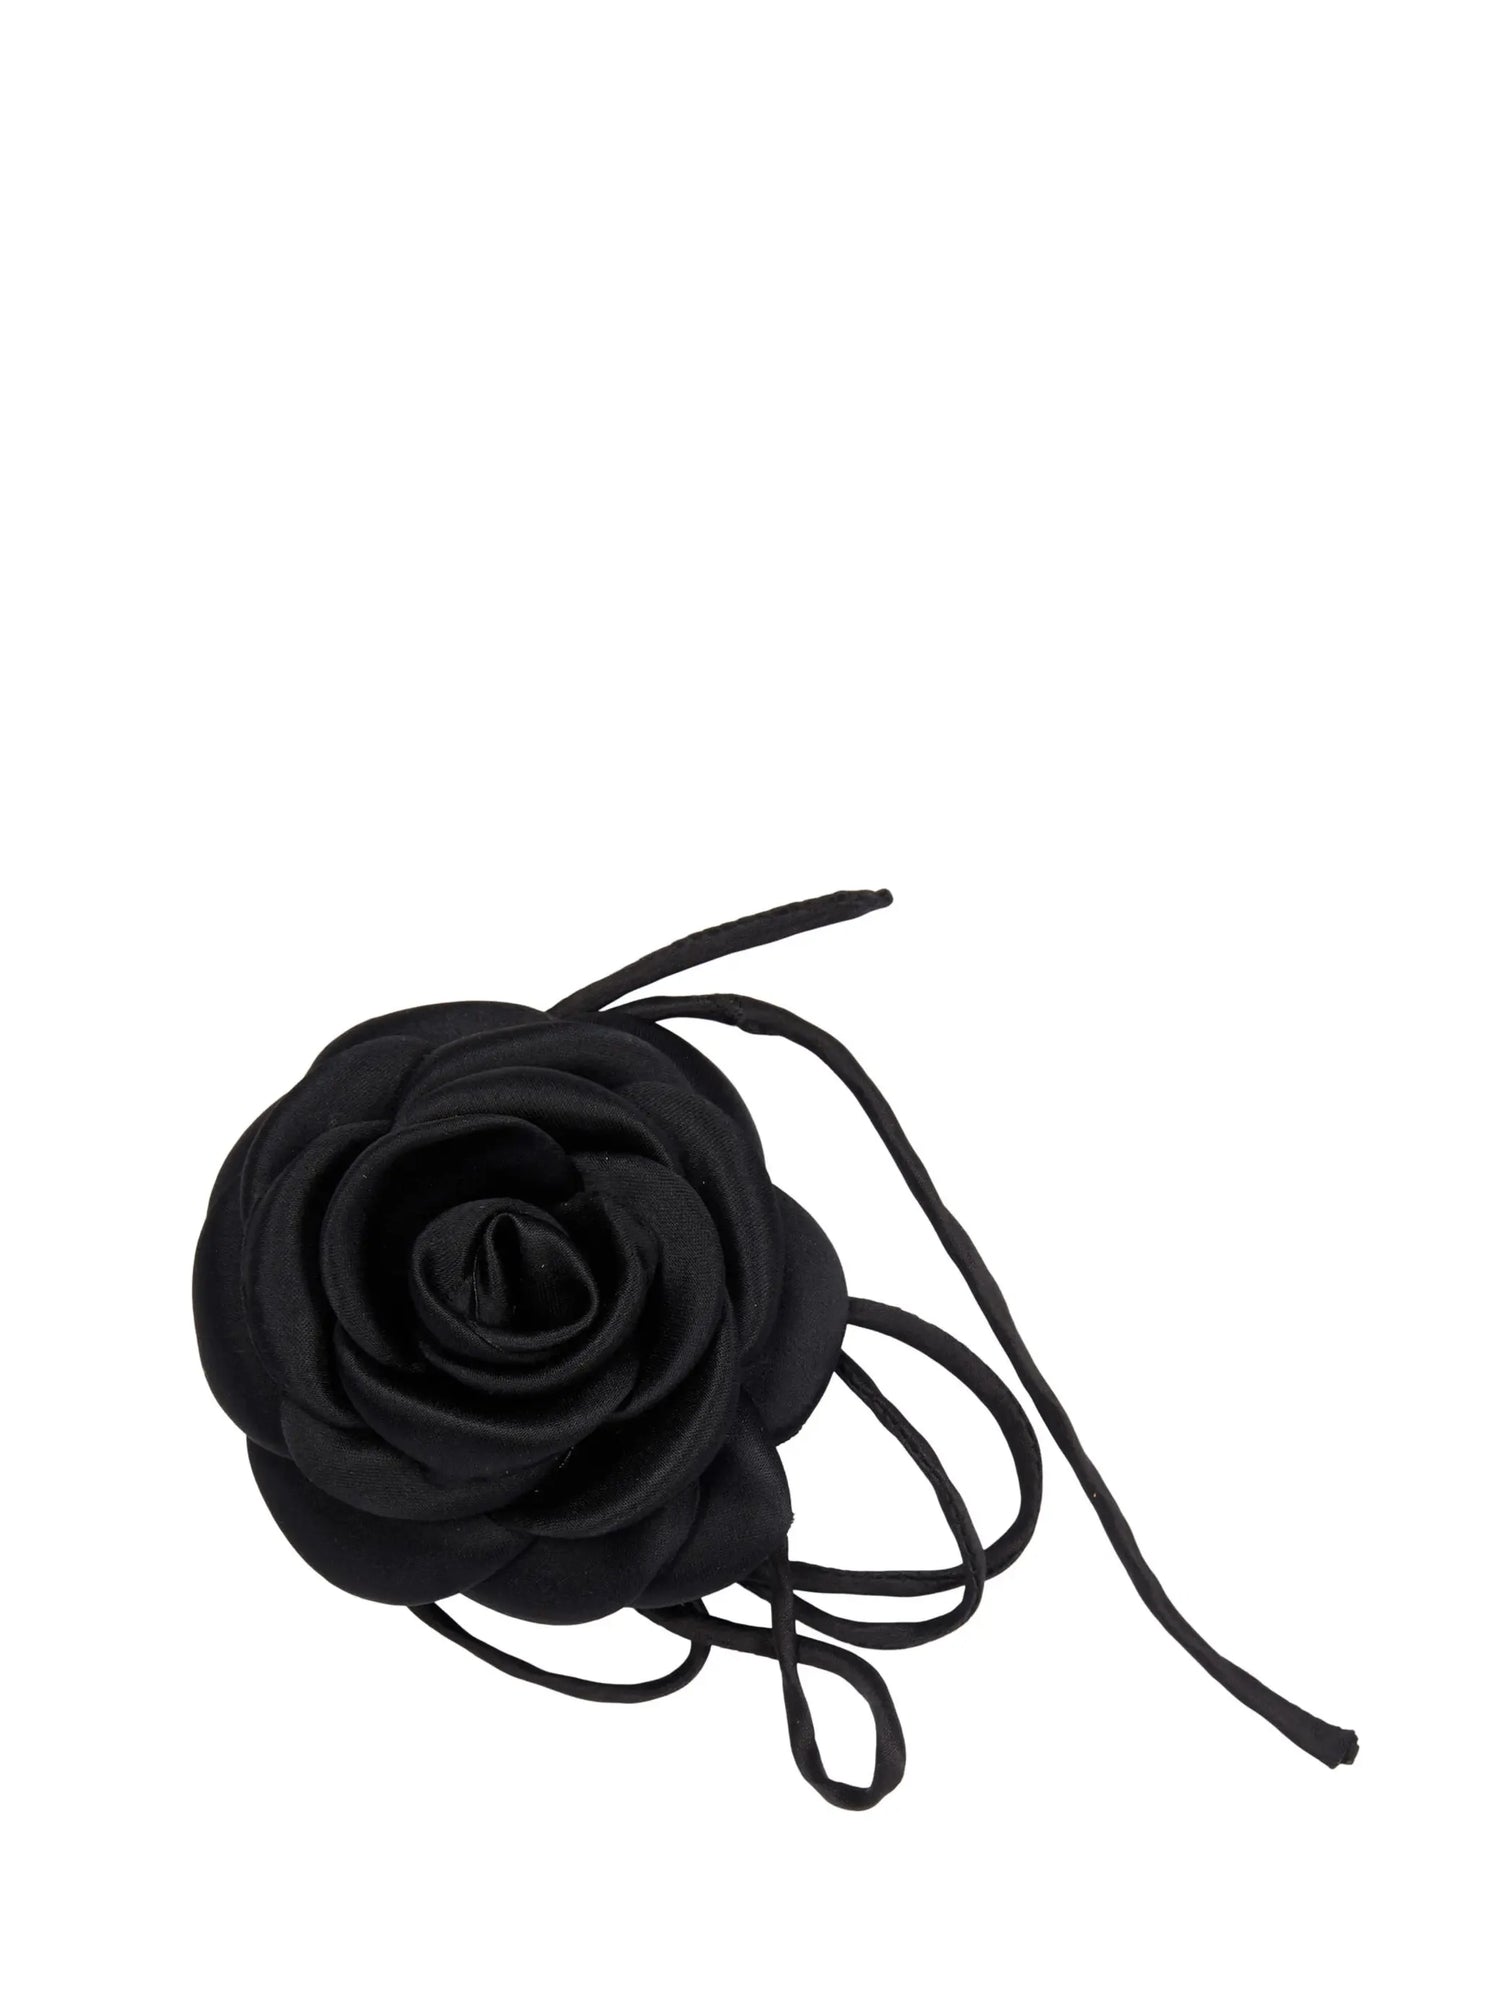 Satin rose string, black